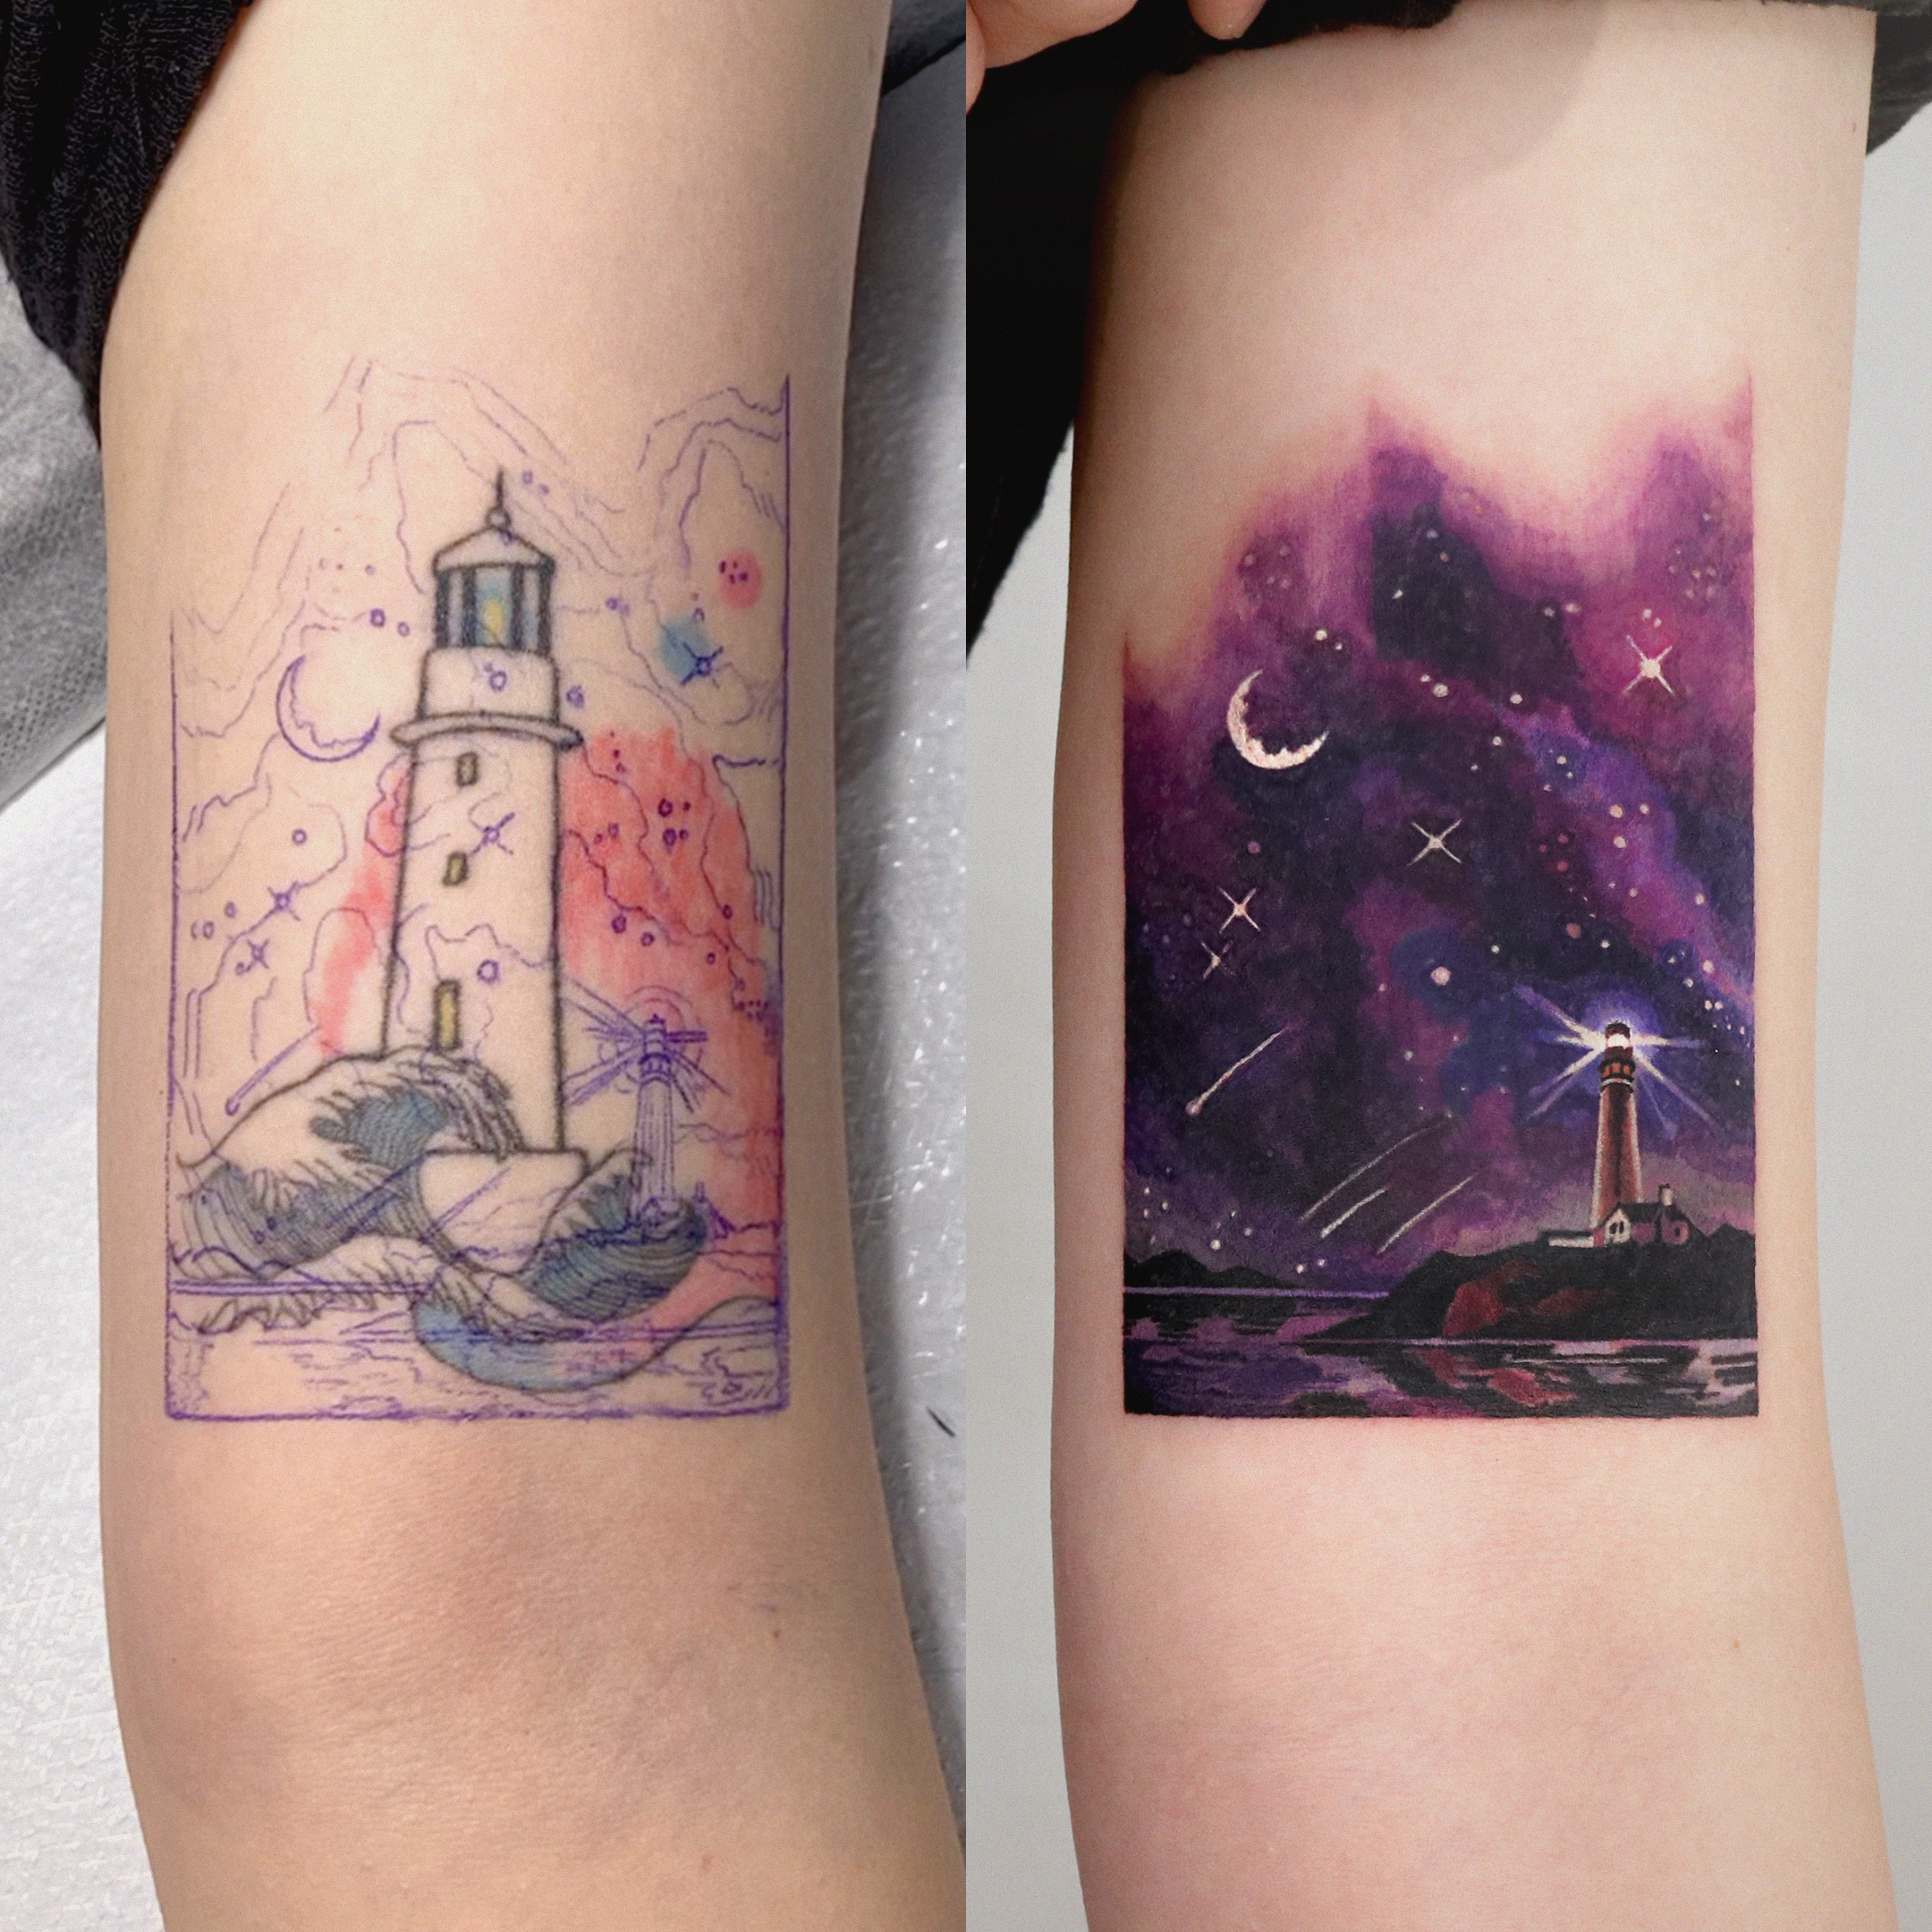 Tattoo uploaded by Dirk Kjelland • #Geometric #watercolor #blacklight # lighthouse #original #art • Tattoodo